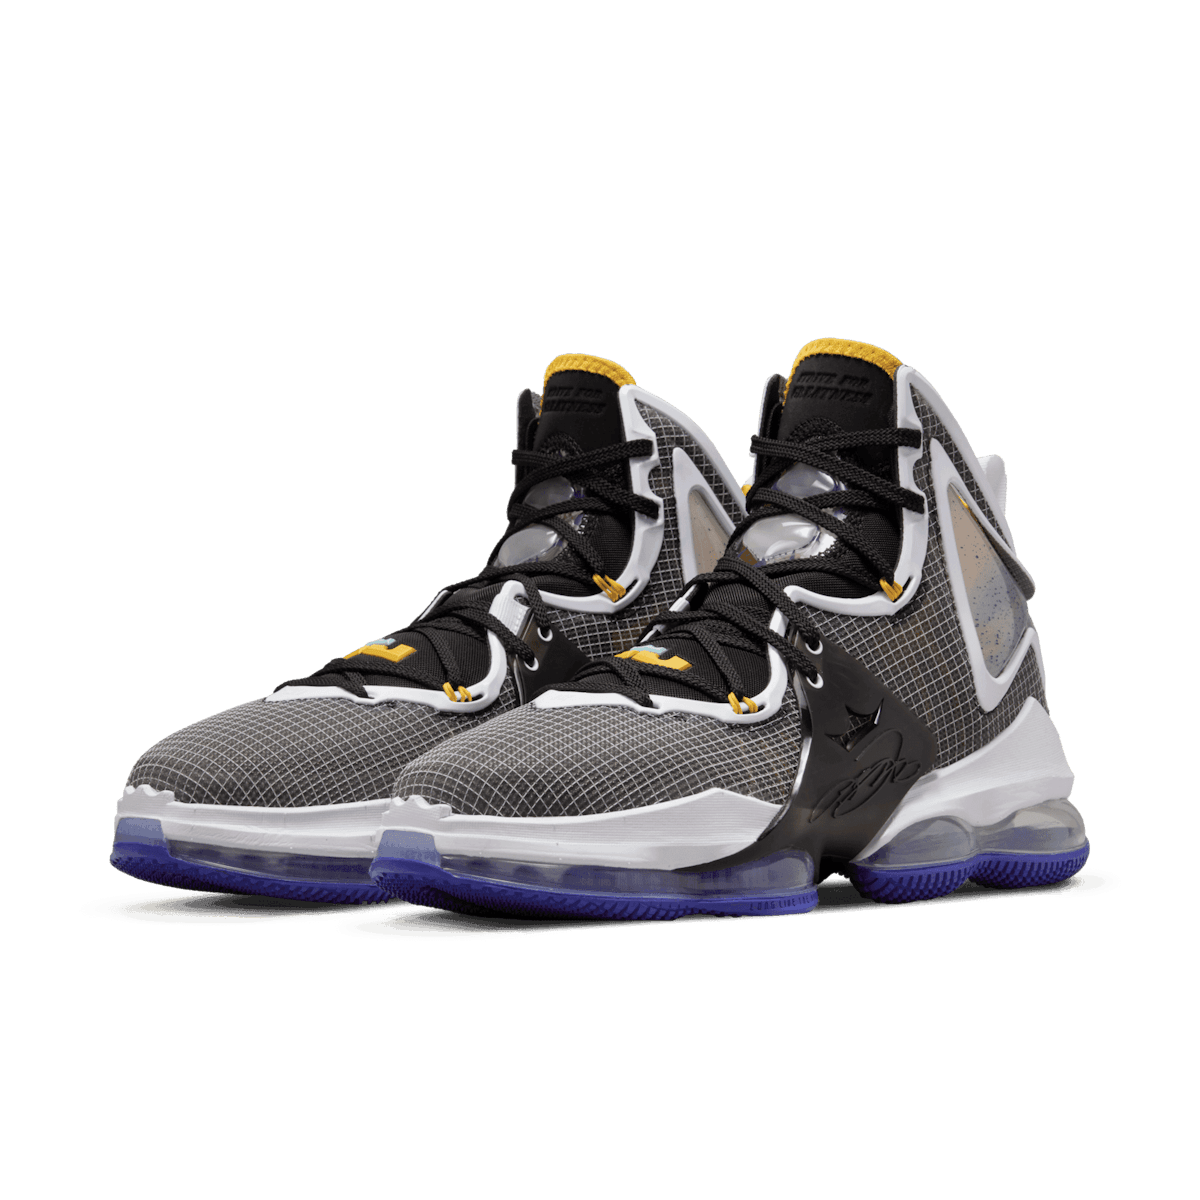 Nike LeBron 19 Basketball Shoes in Black Angle 2